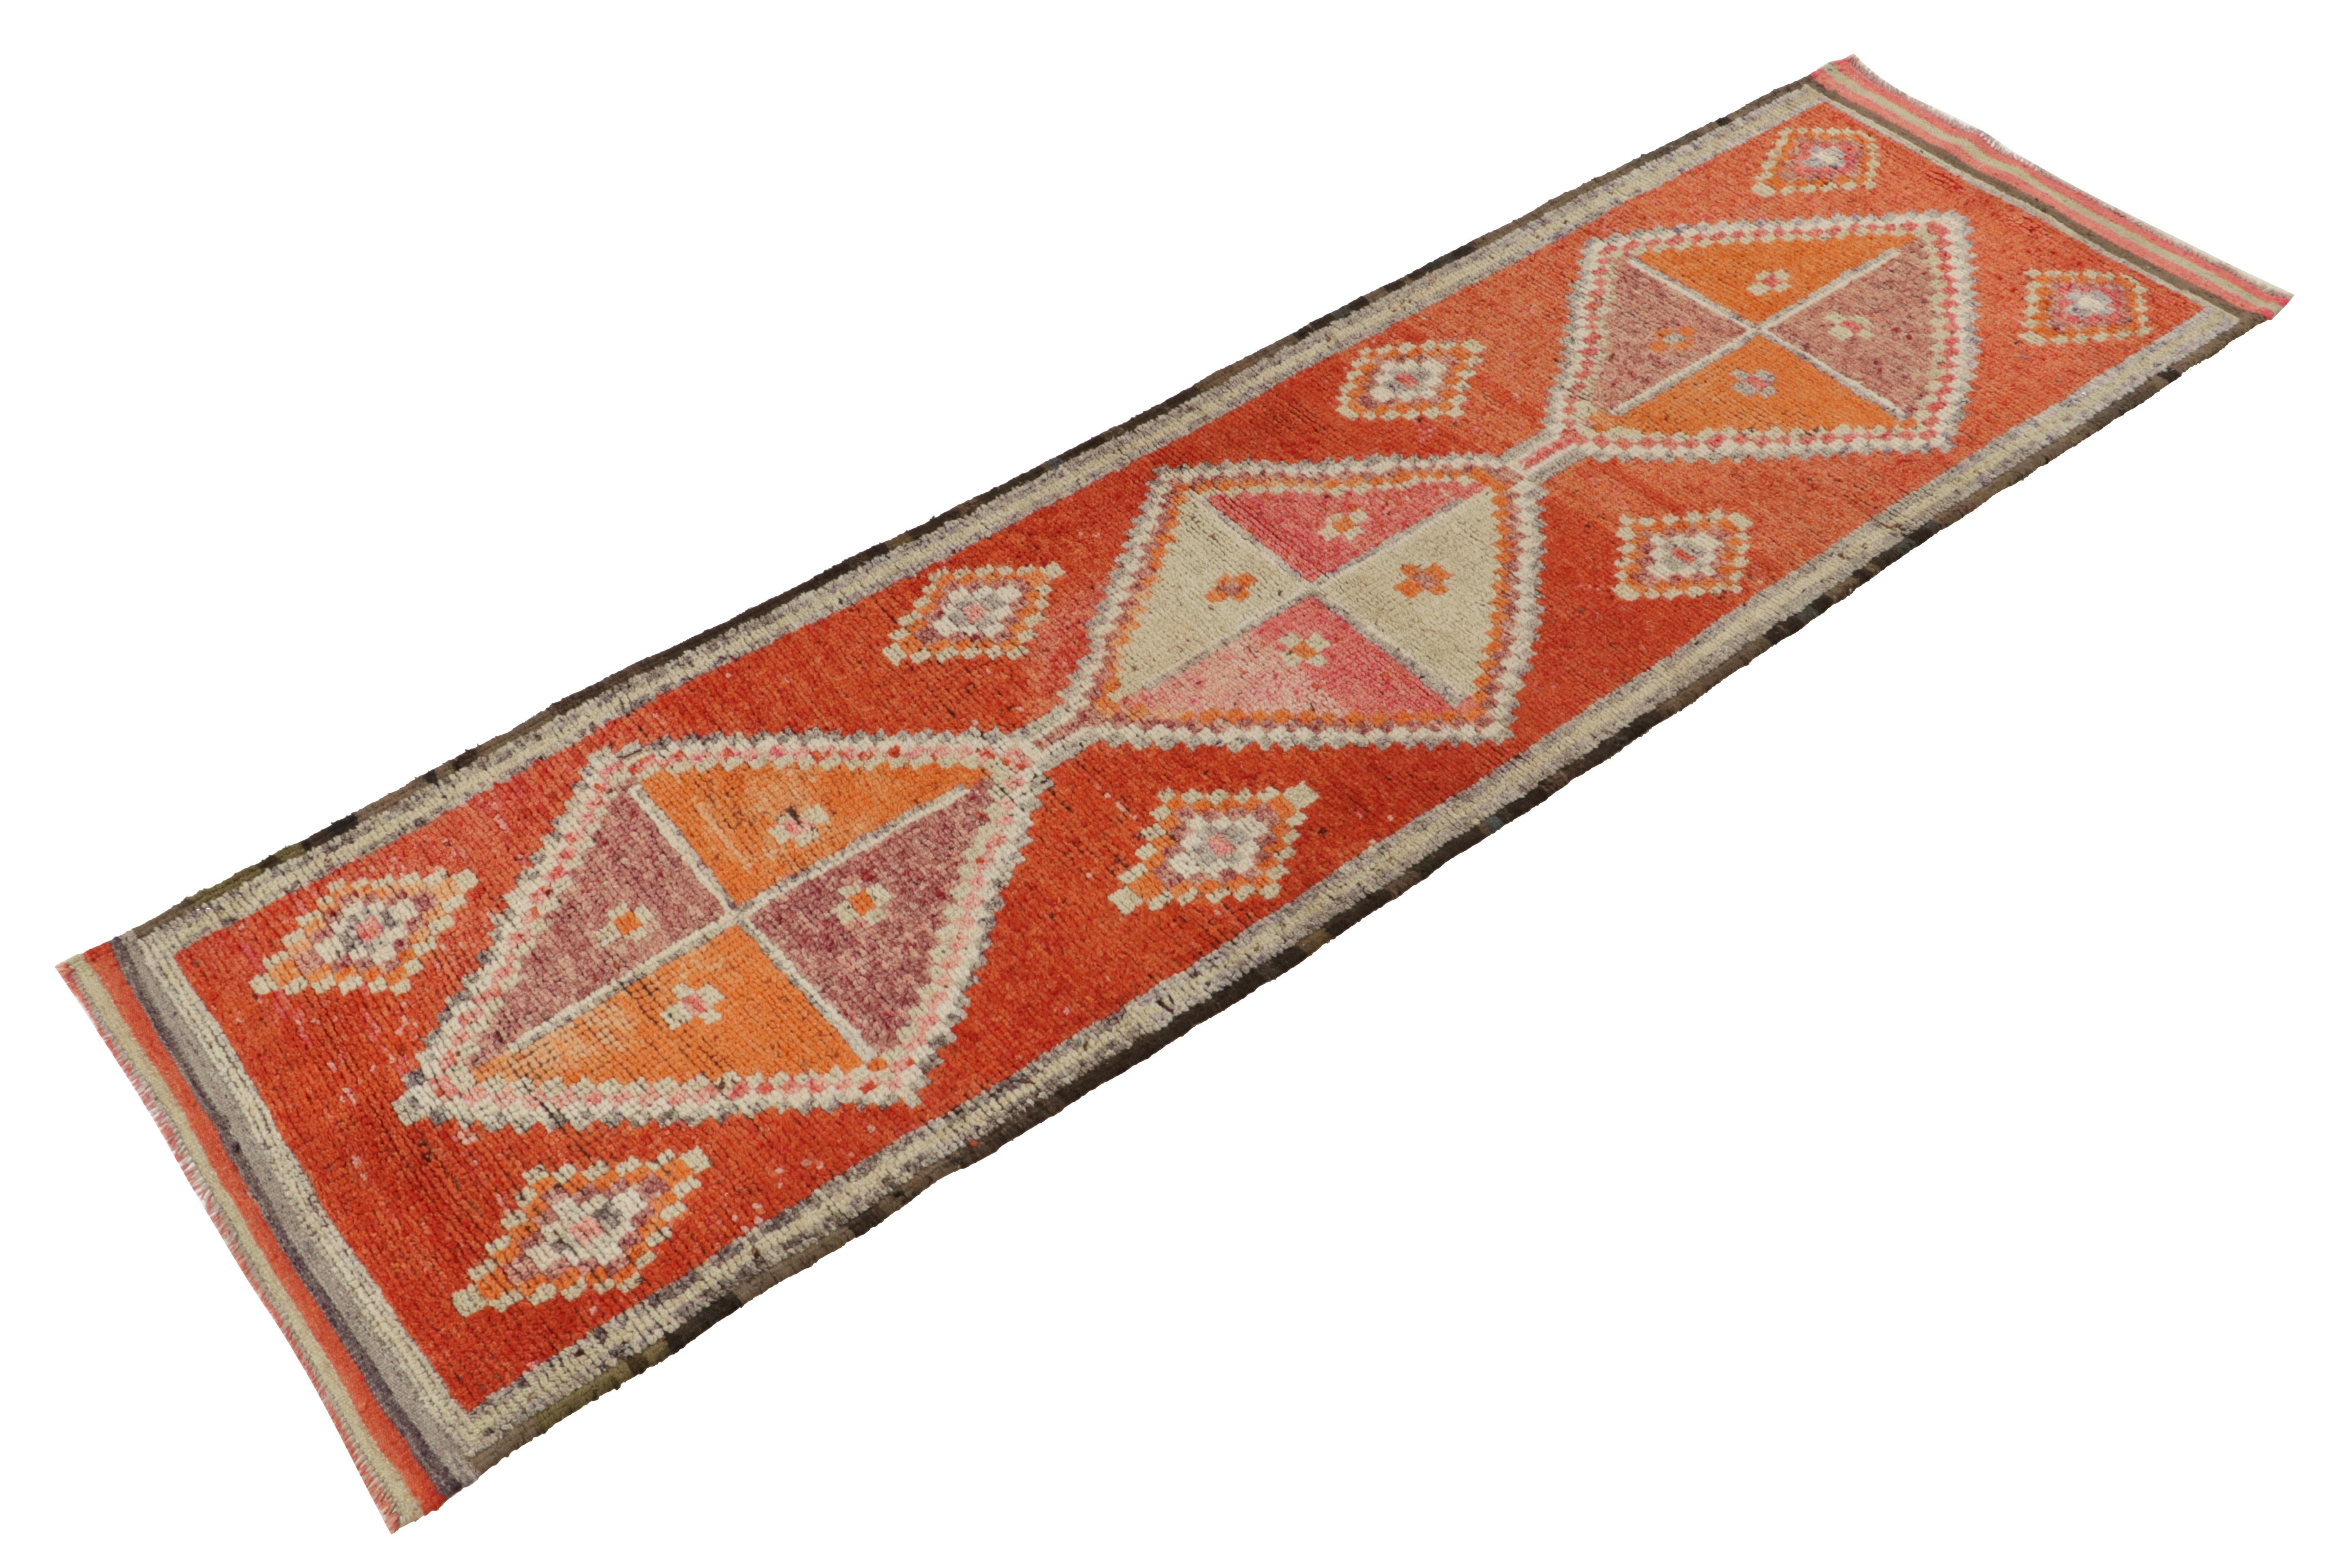 Turkish 1950s Vintage Tribal Runner in Orange, Red Medallion Patterns by Rug & Kilim